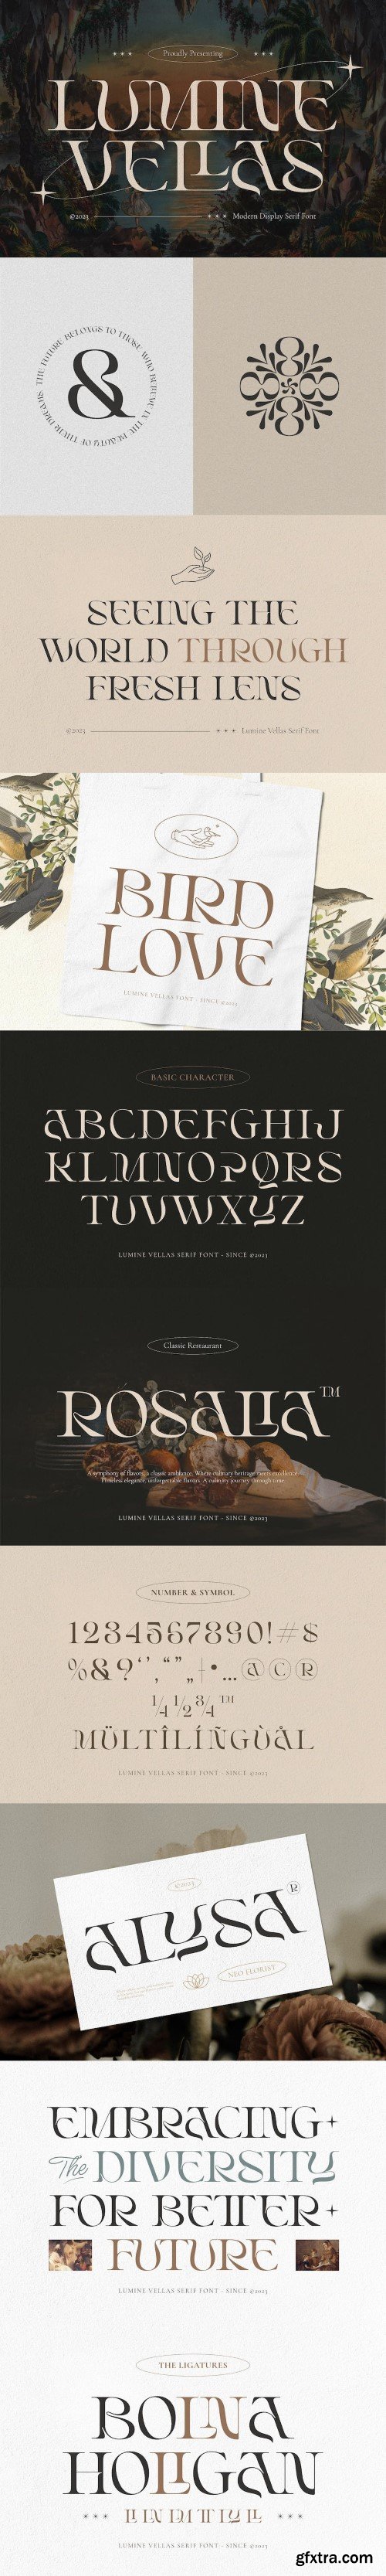 Lumenia Vellas - Modern Serif